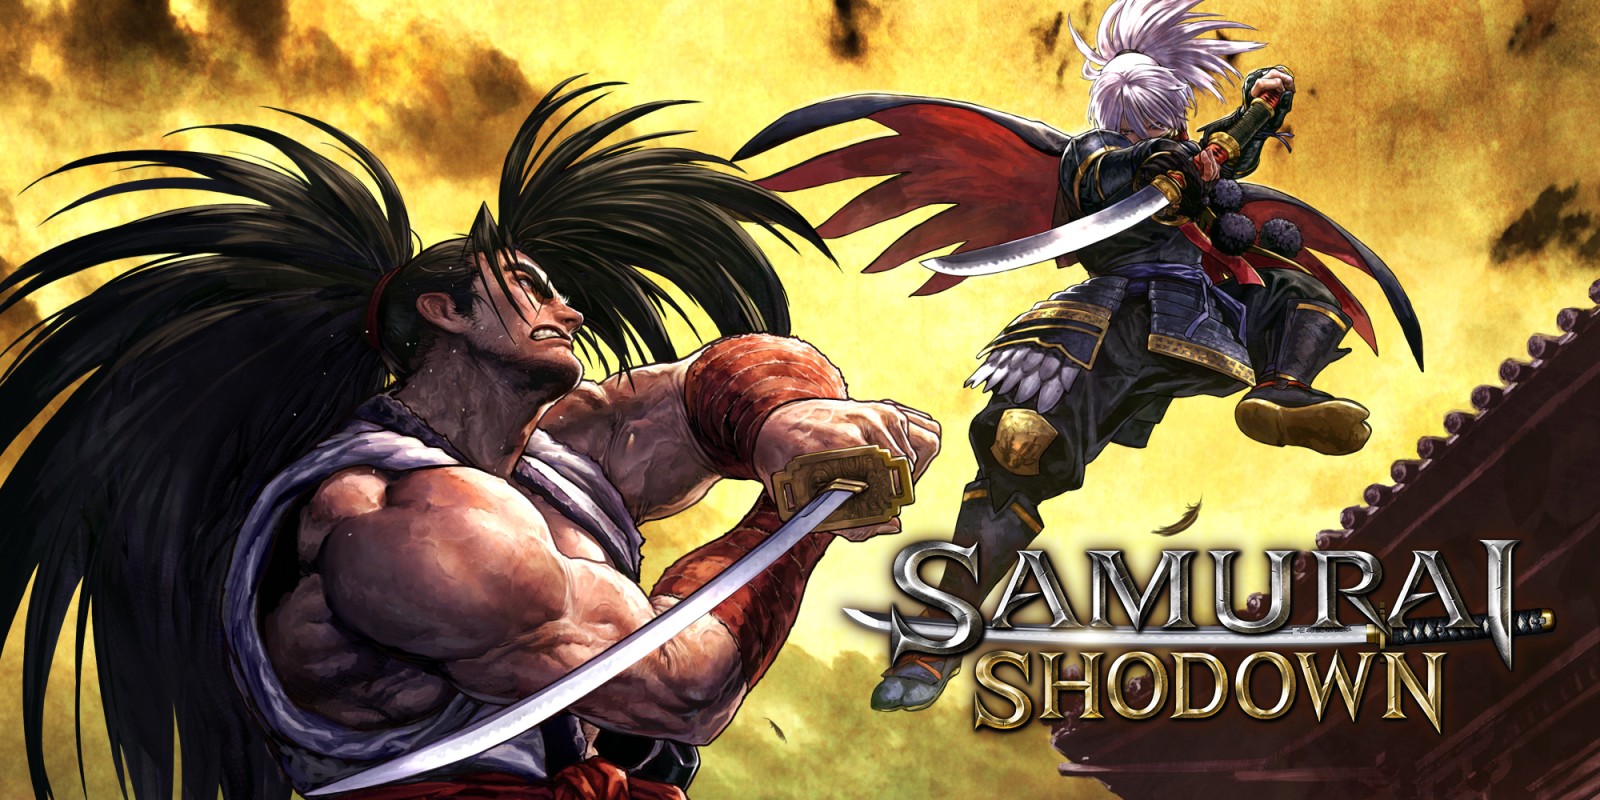 samurai showdown